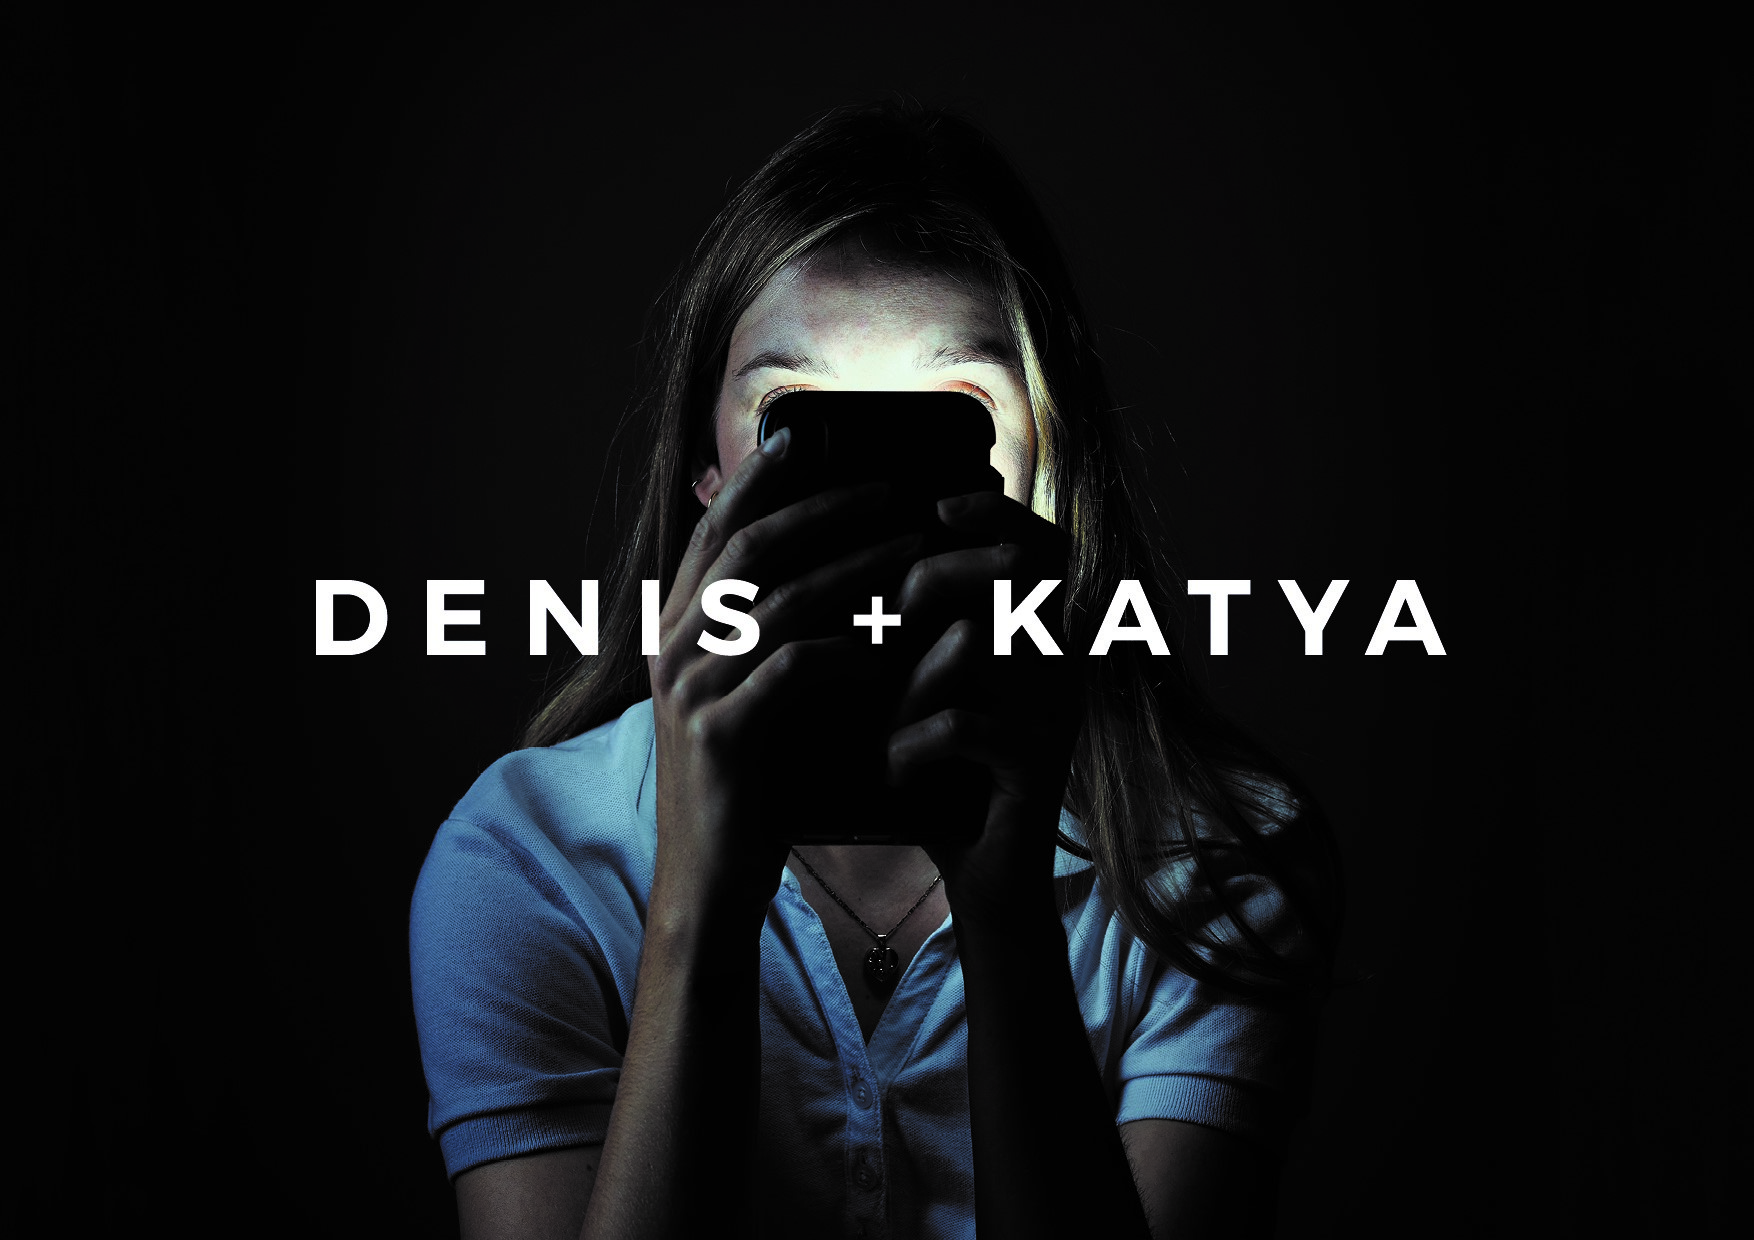 Denis and Katya